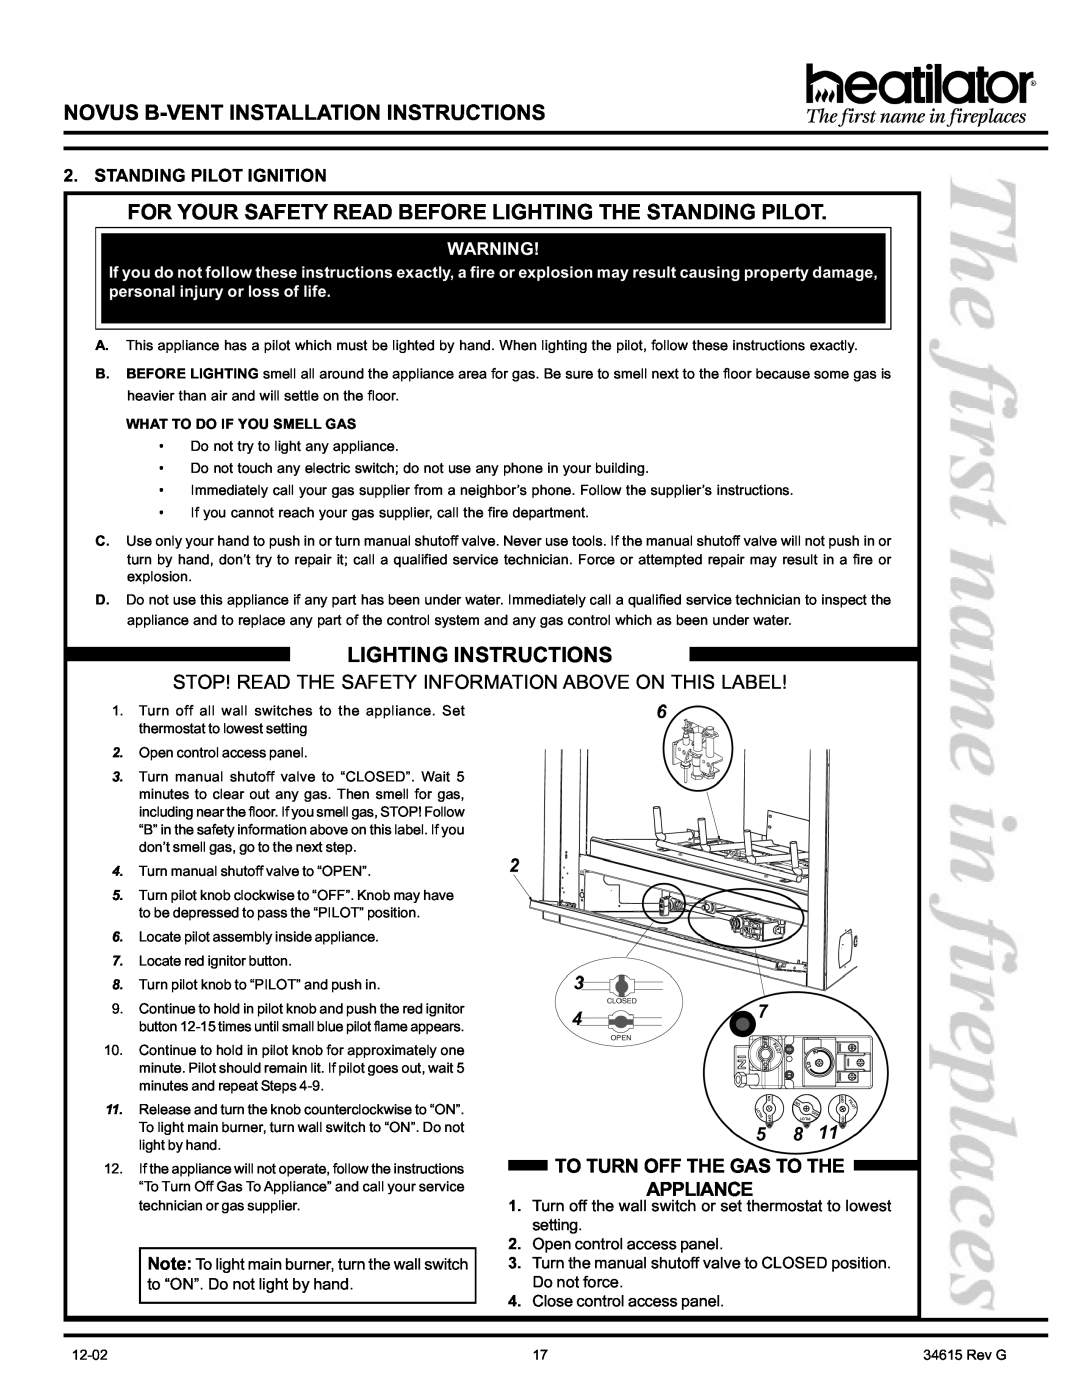 Hearth and Home Technologies GNBC33 Lighting Instructions, Standing Pilot Ignition, Novus B-Ventinstallation Instructions 